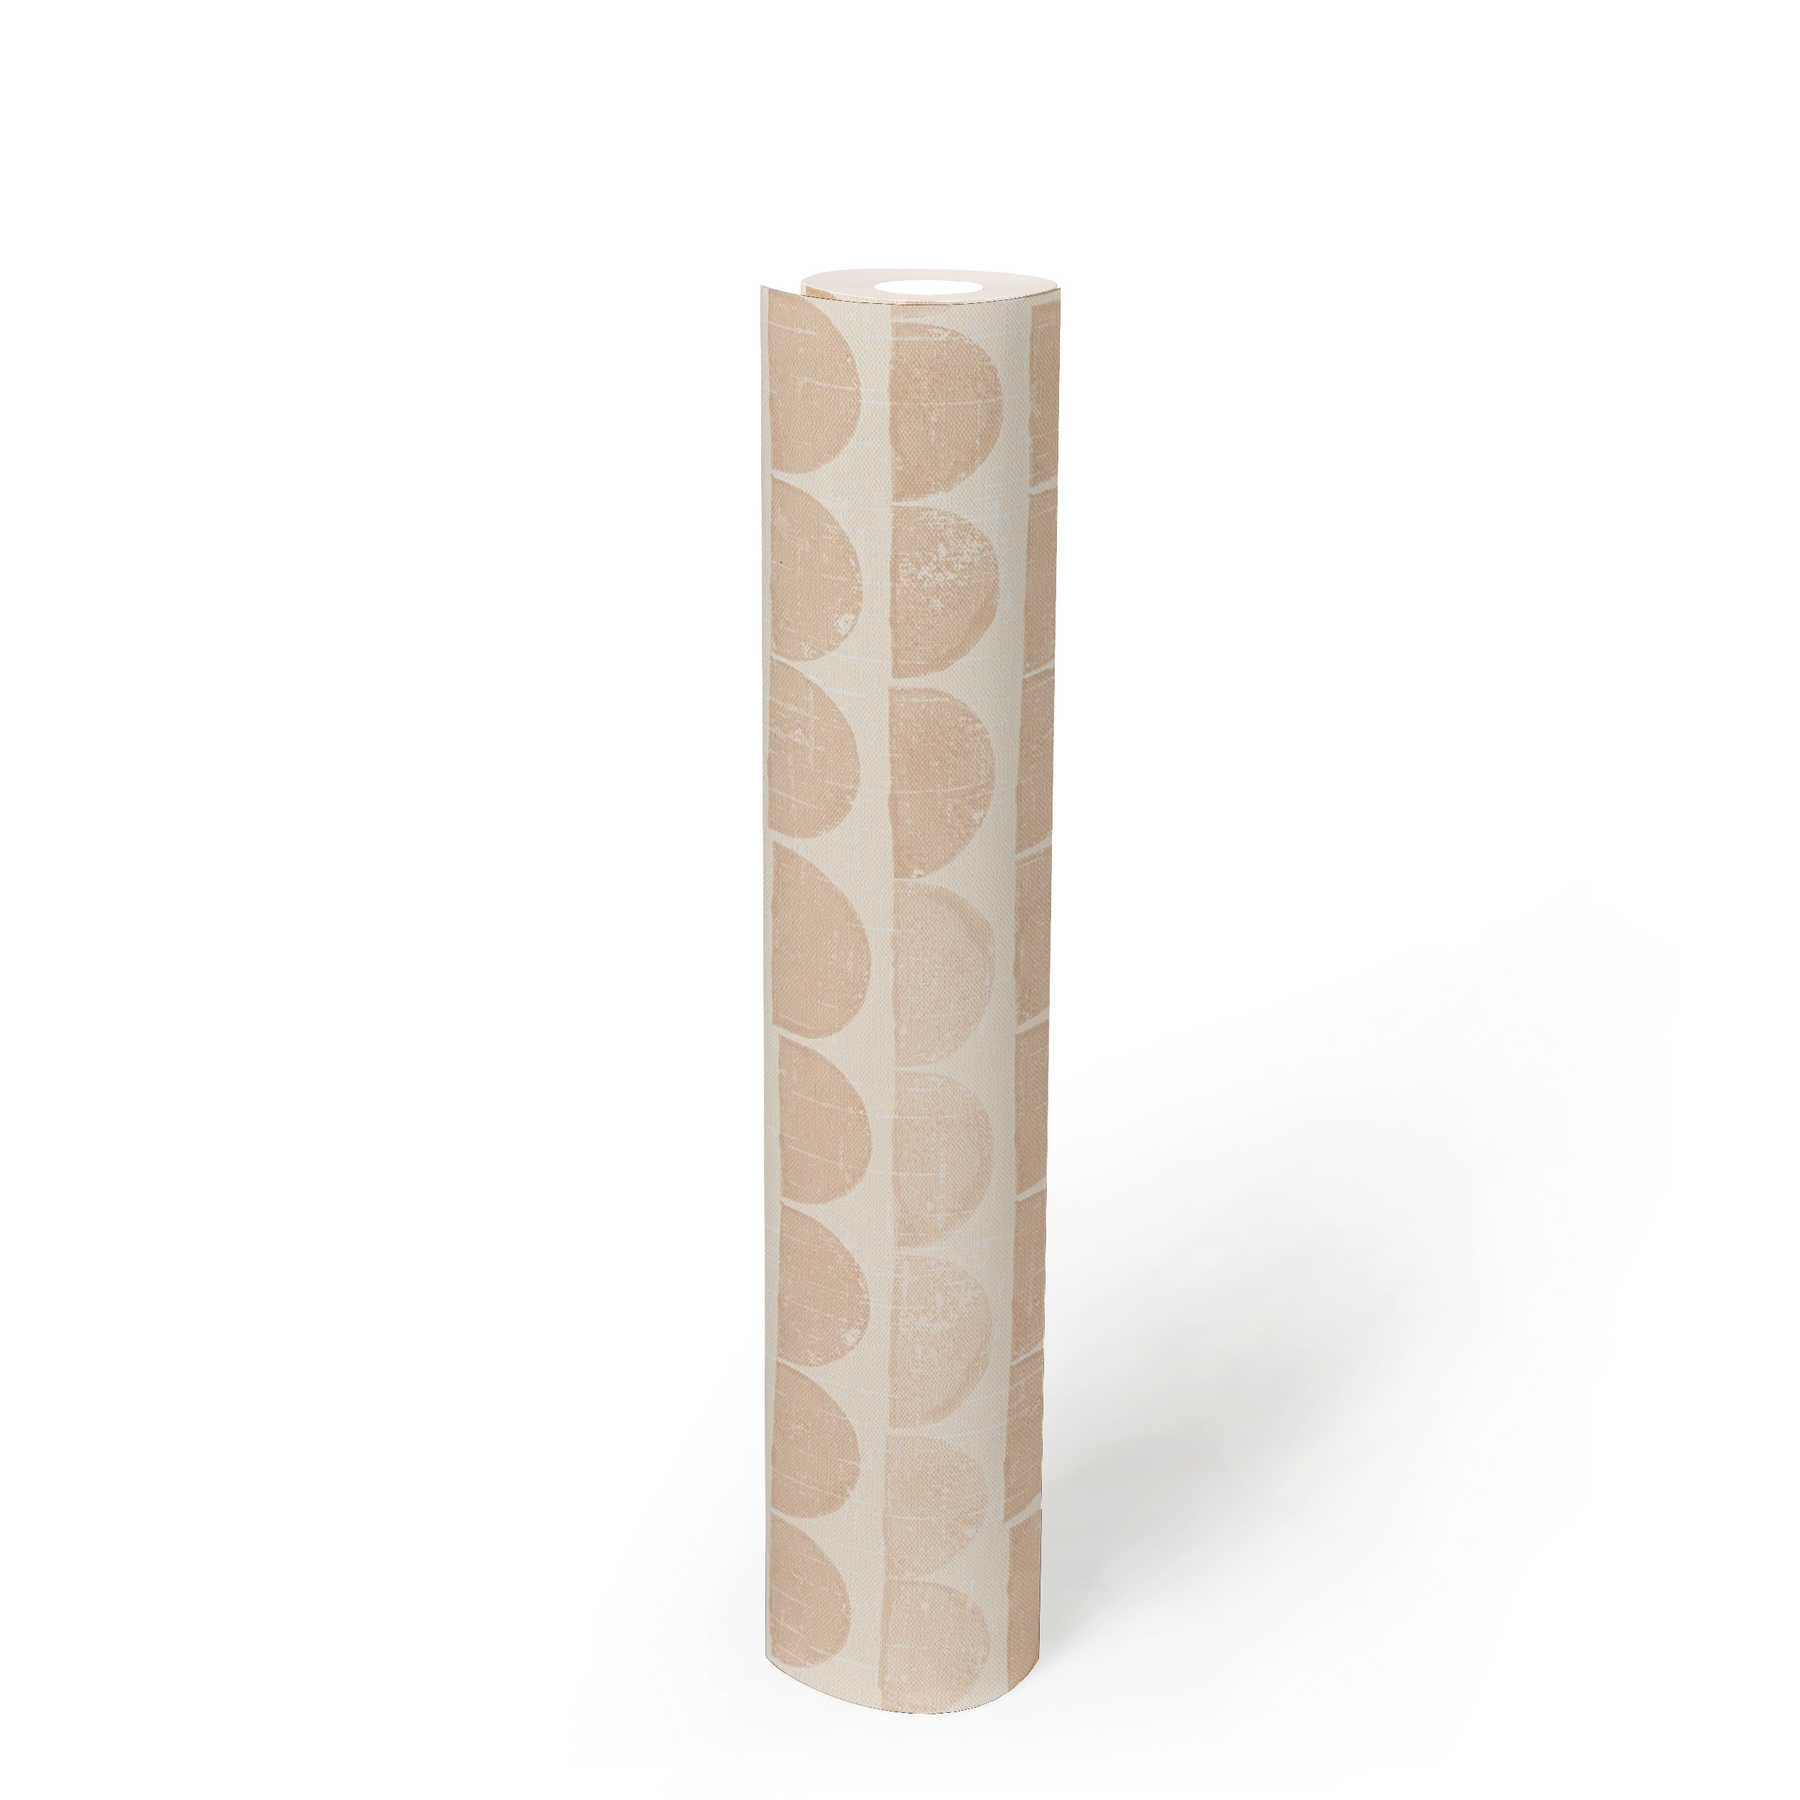             Scandinavian design wallpaper semicircle pattern - beige, cream
        